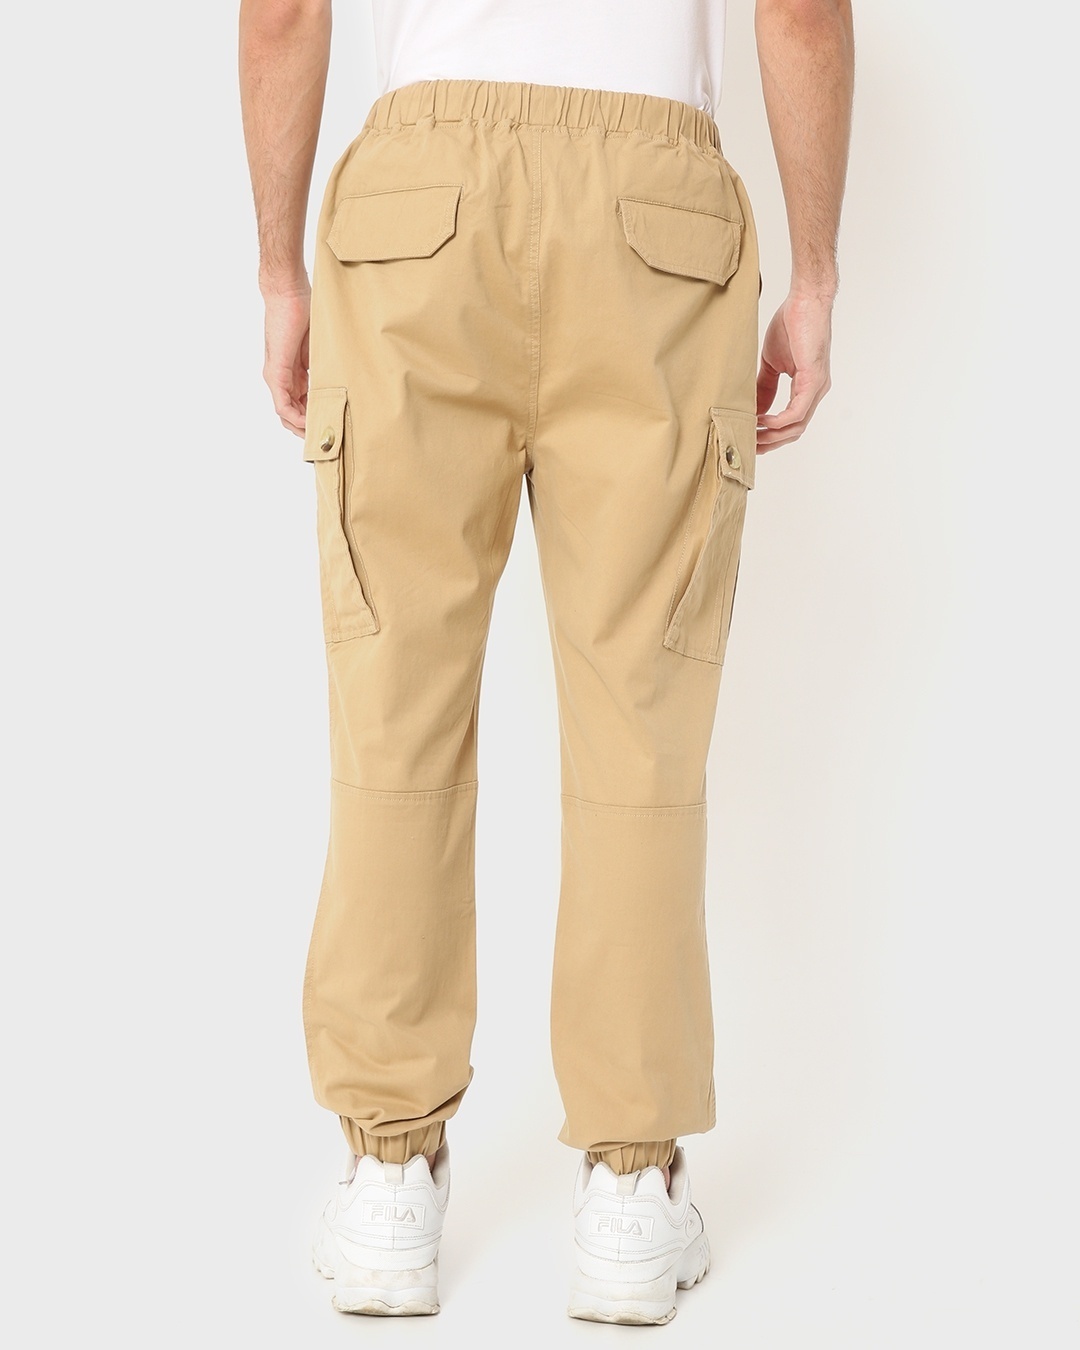 Buy Khaki Elastic Waistband Cargo Pants for Men brown Online at Bewakoof